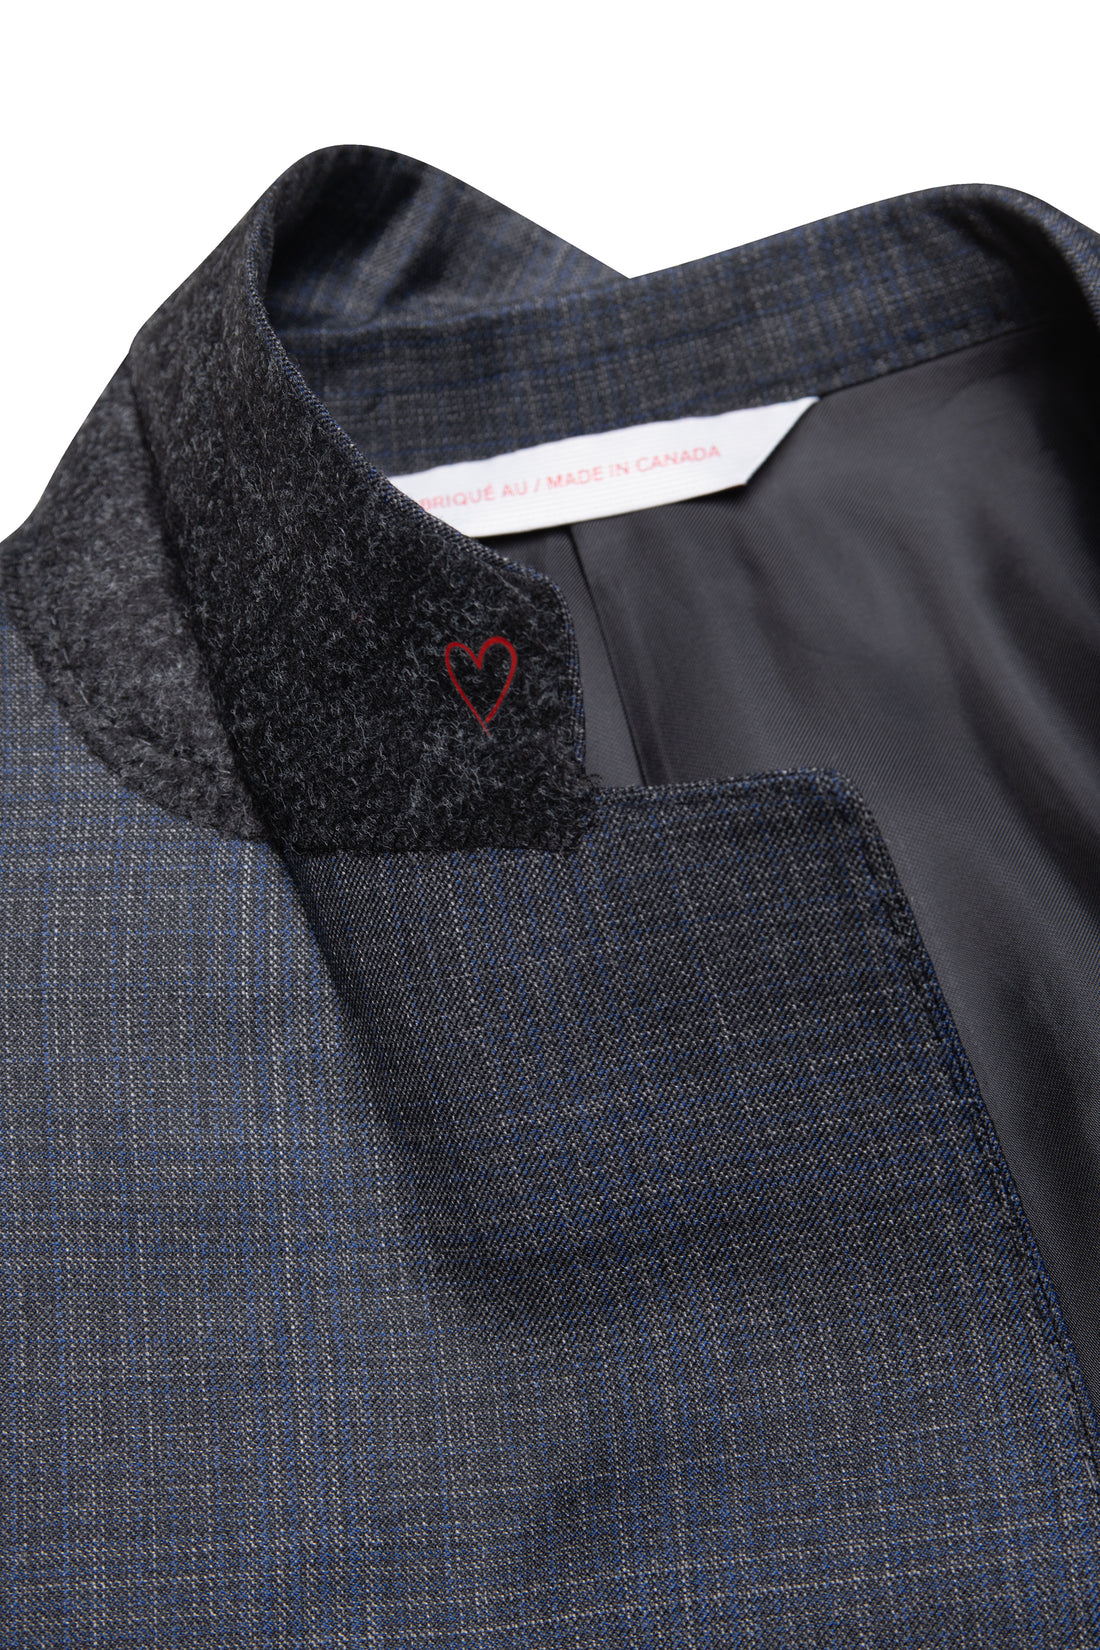 Charcoal-Blue Graph Check Suit under collar heart detail